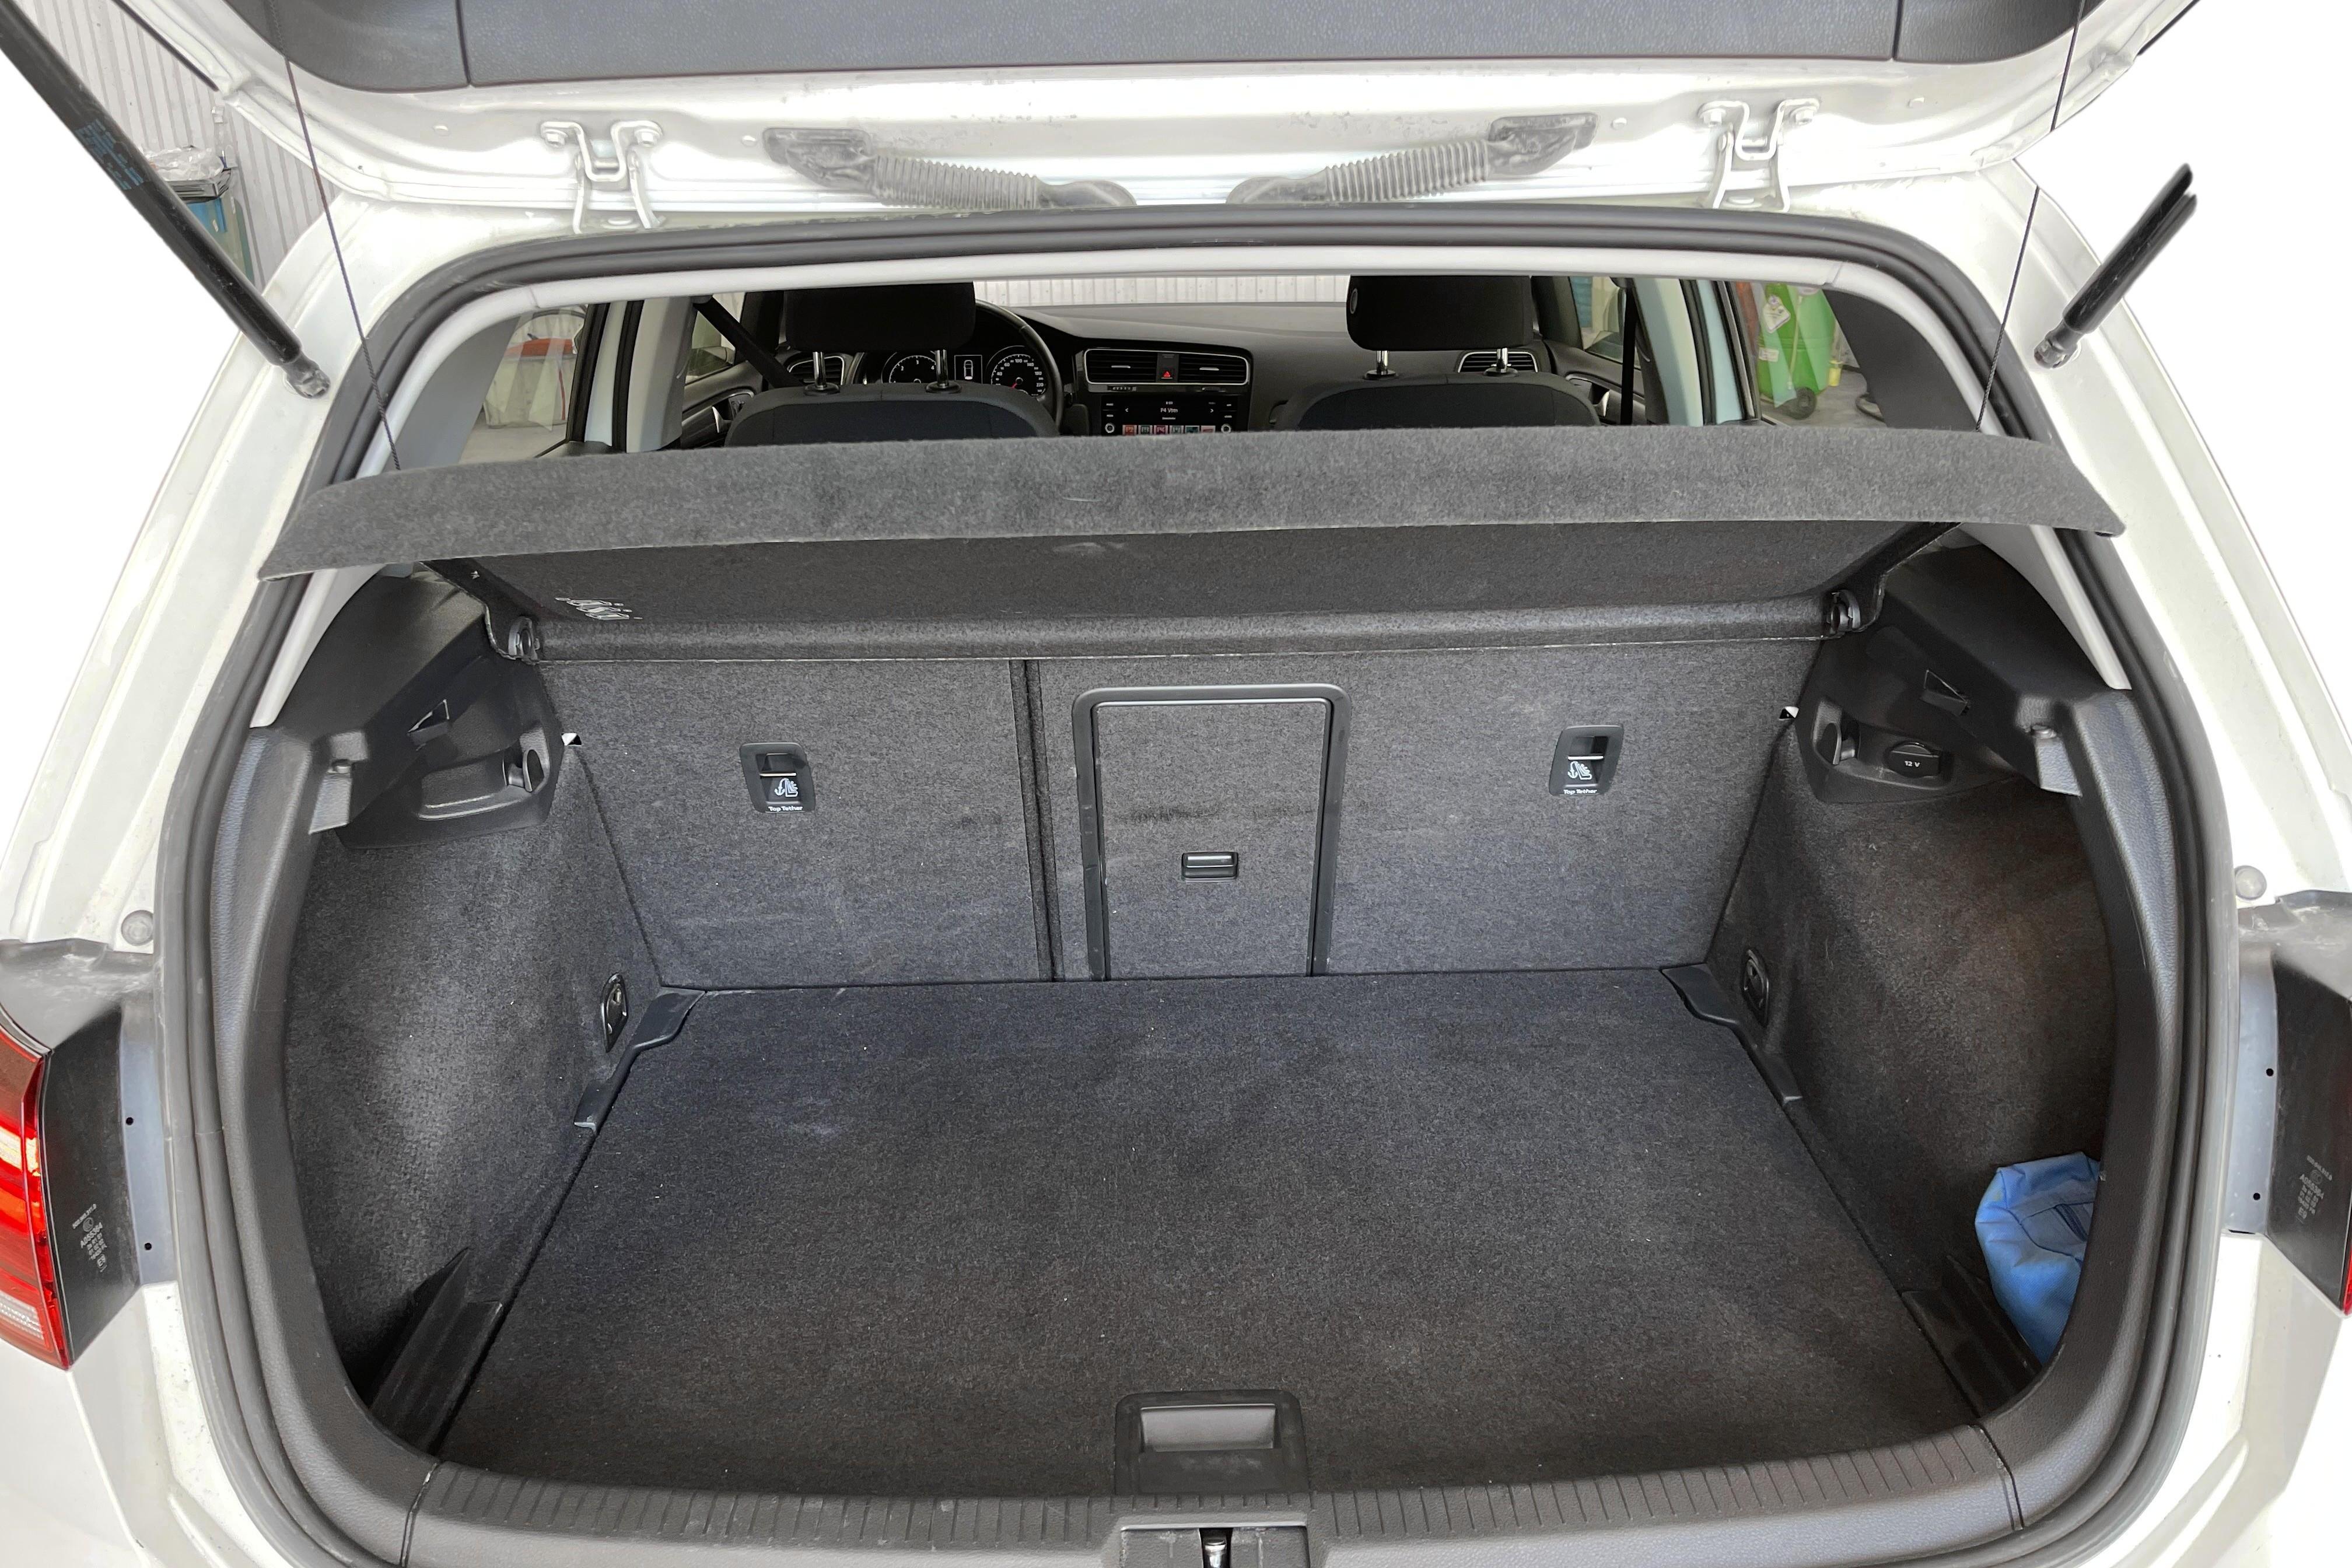 VW Golf VII 2.0 TDI 5dr 4MOTION (150hk) - 302 680 km - Manual - white - 2018